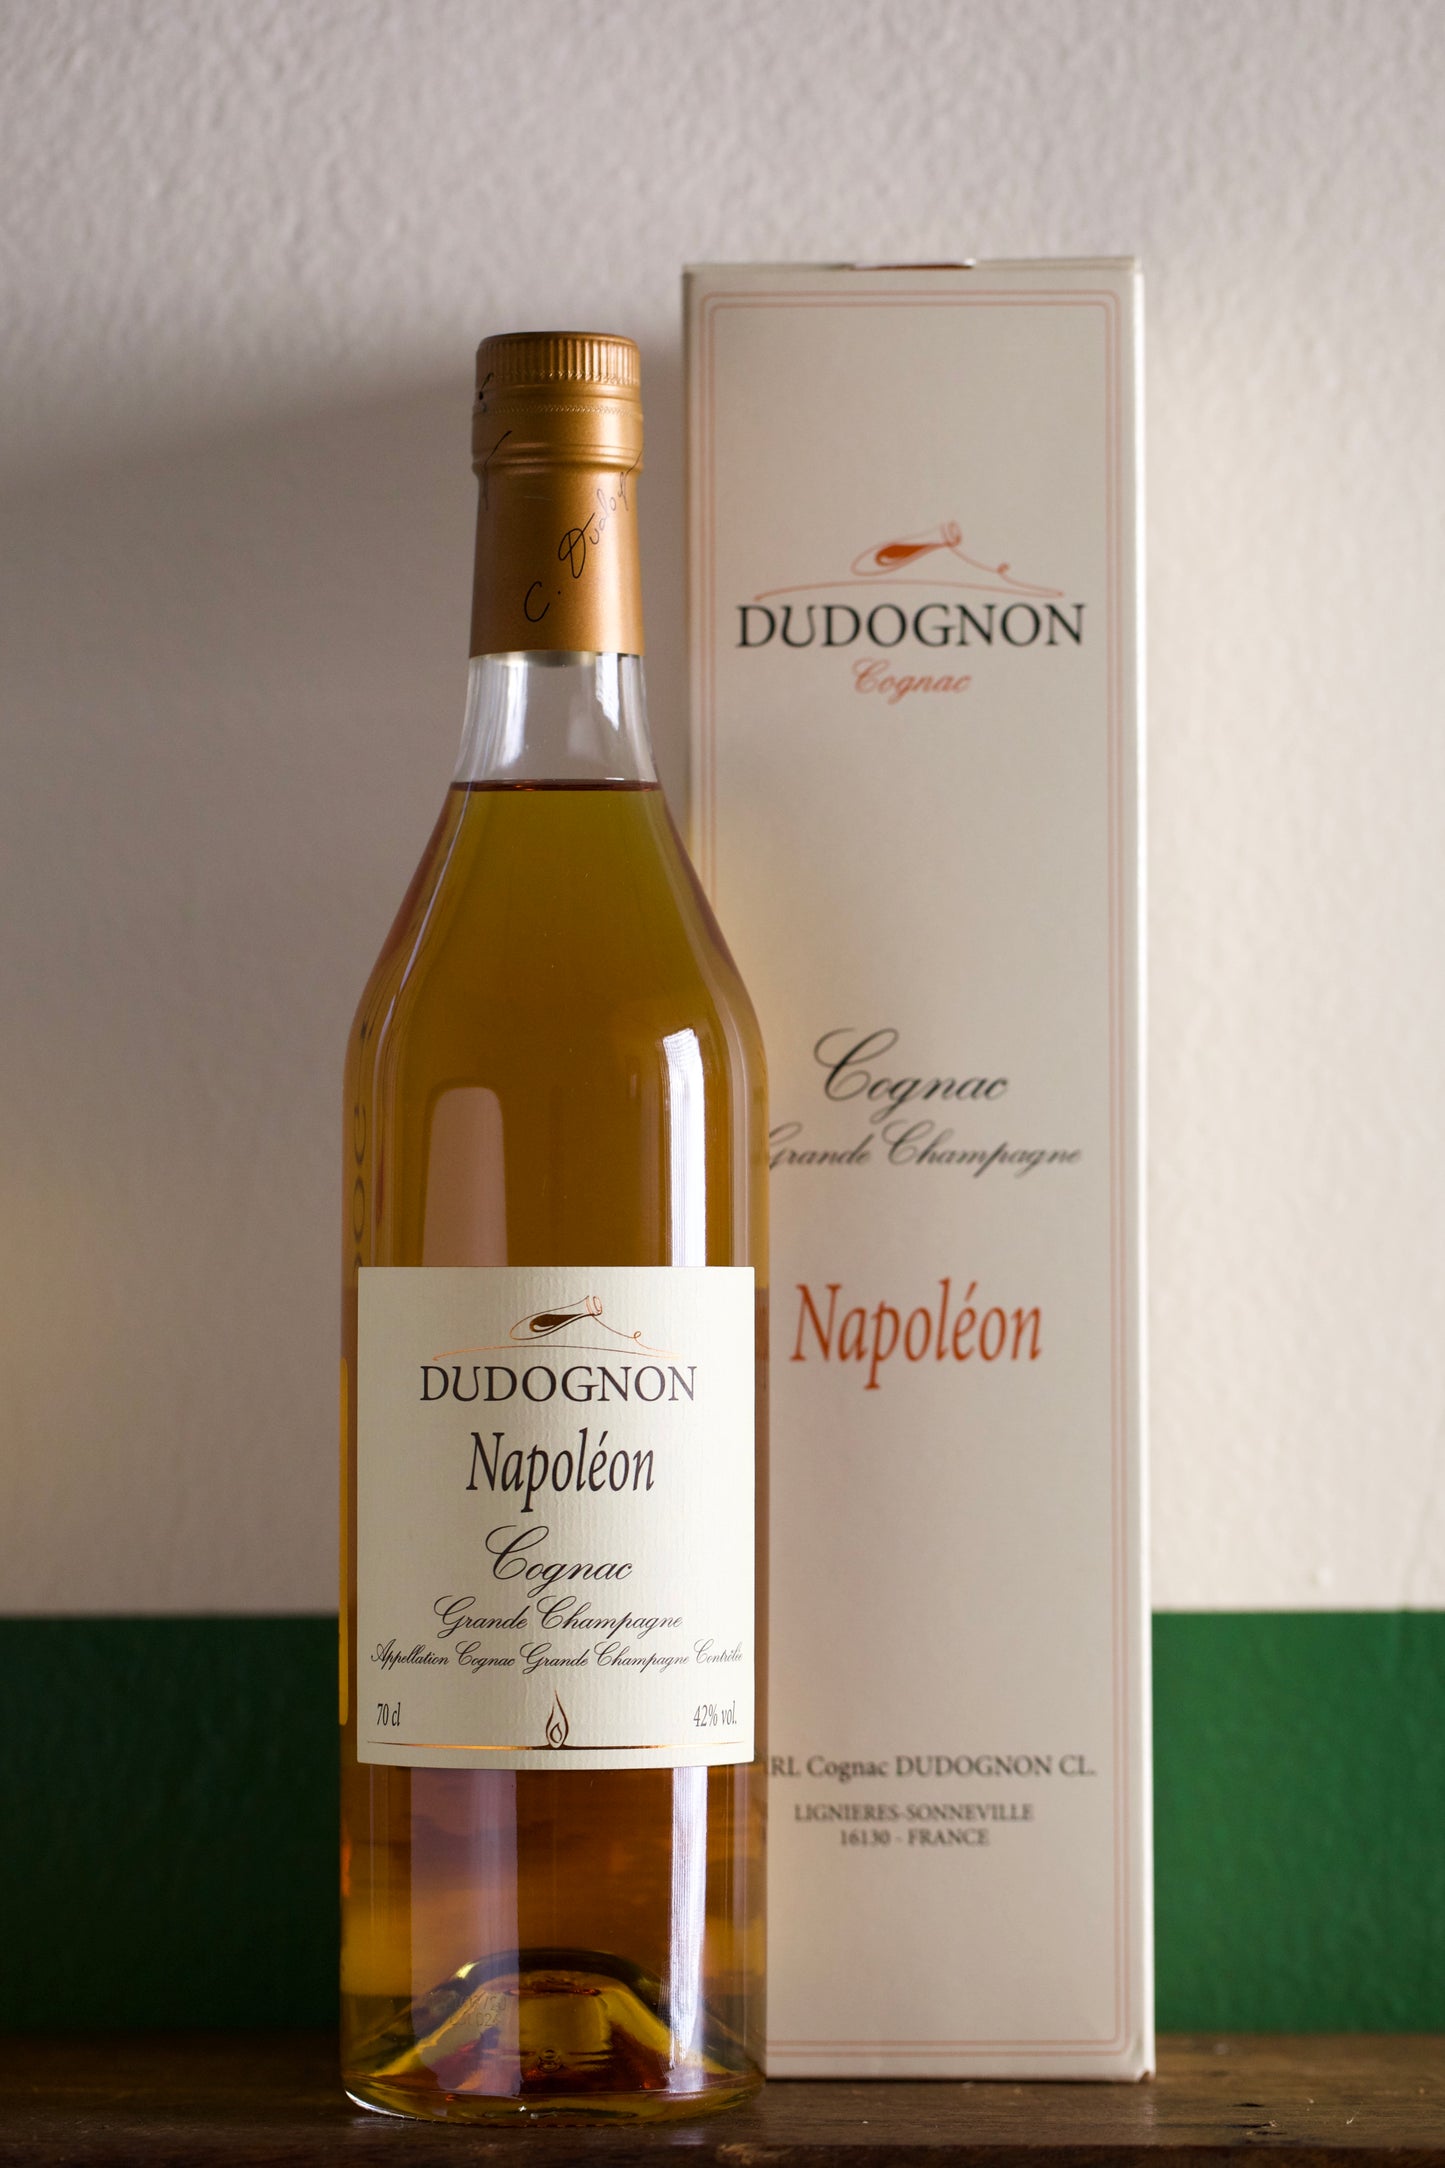 Bottle of Cognac Dudognon 'Napoleon' 15 years 700ml